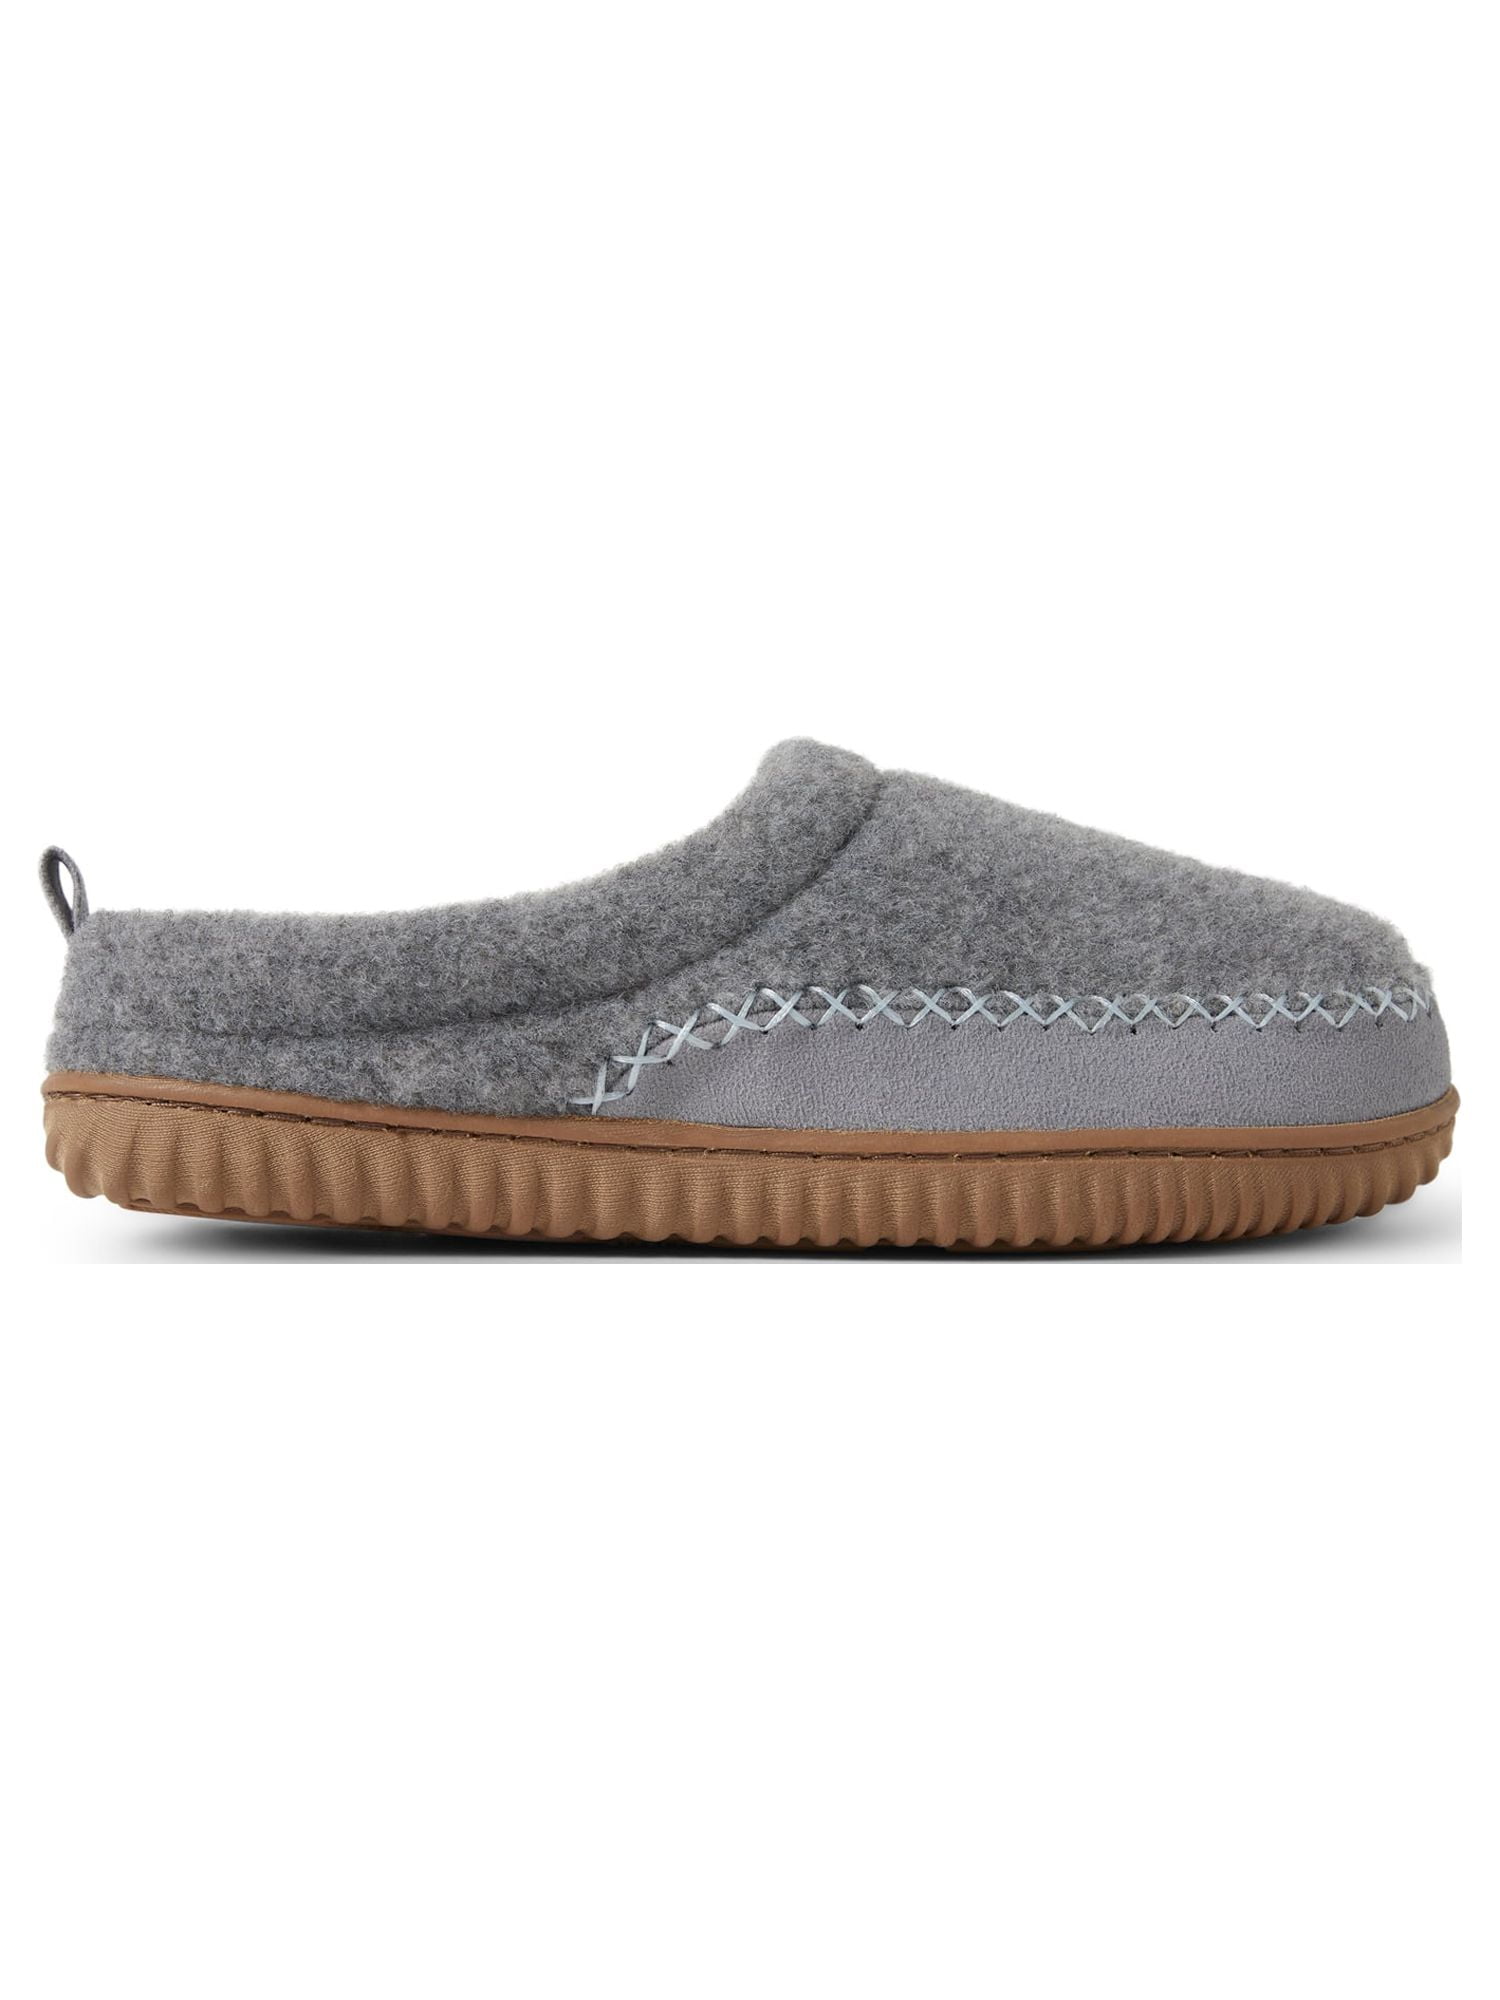 DF by Dearfoams Women's Textured Knit Clog slippers - Walmart.com | Clog  slippers, Slippers, Dearfoams